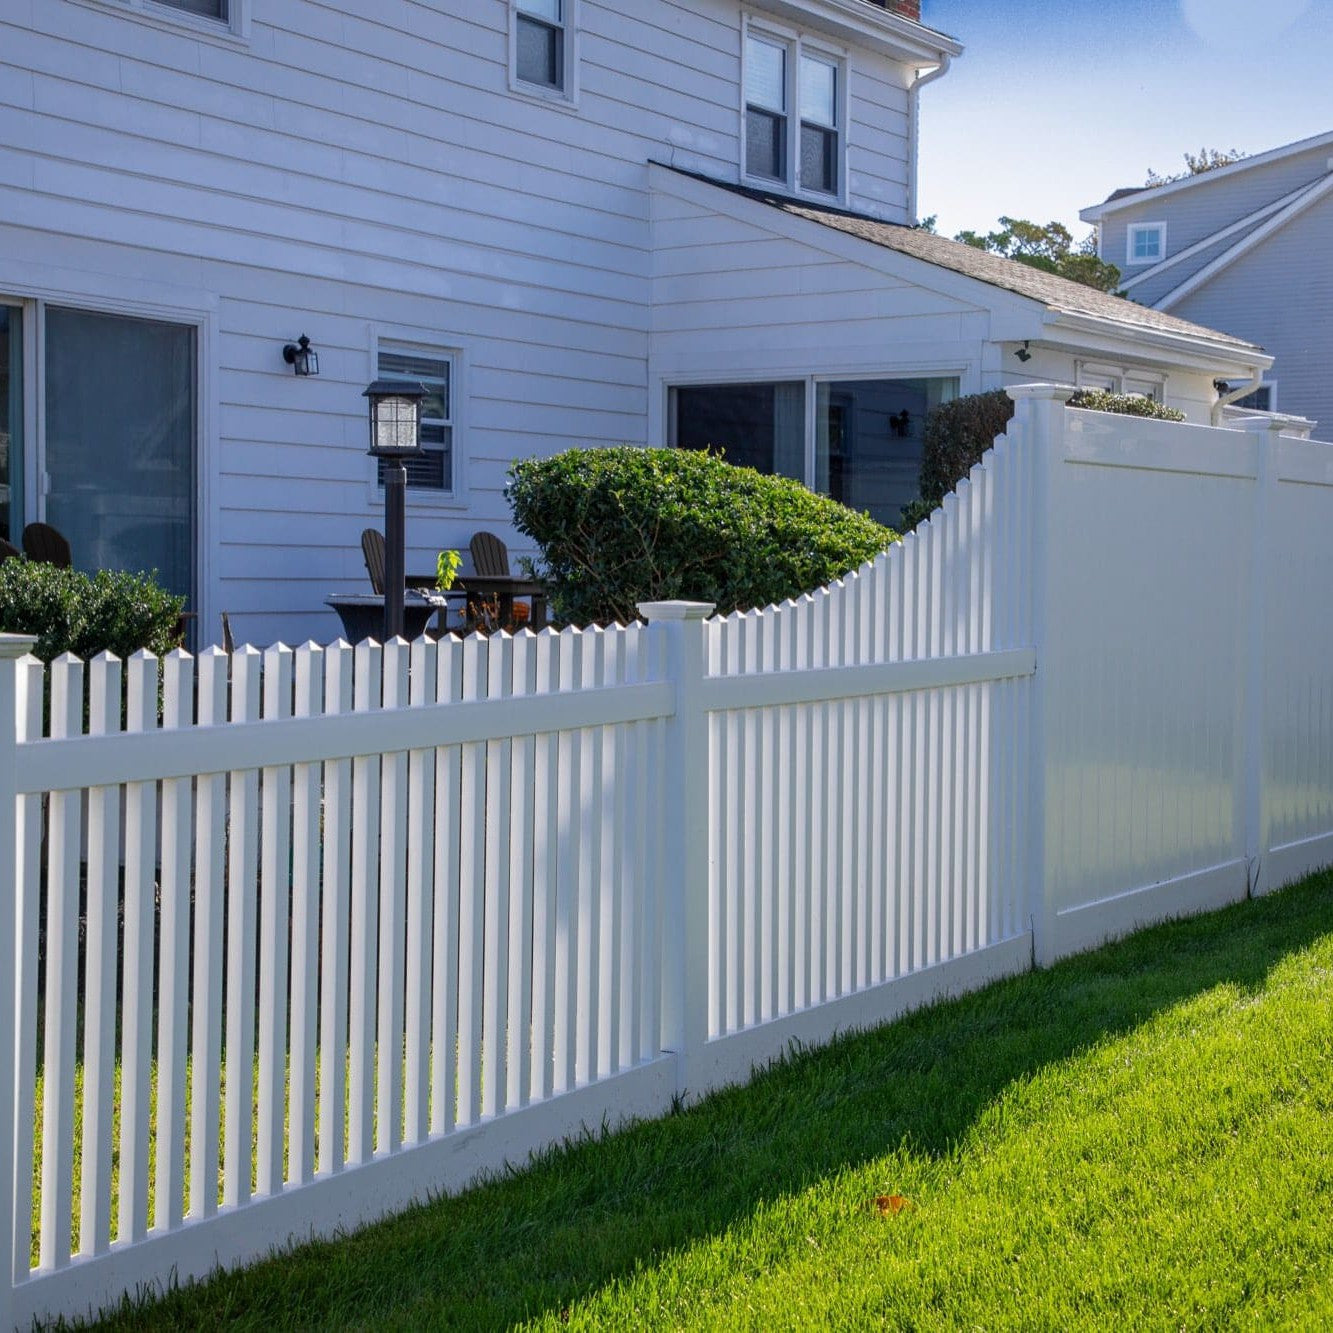 Chestnut Haven Series - Fence Panel - 4' x 8'-Vinyl Fence Panels-ActiveYards-White-FenceCenter